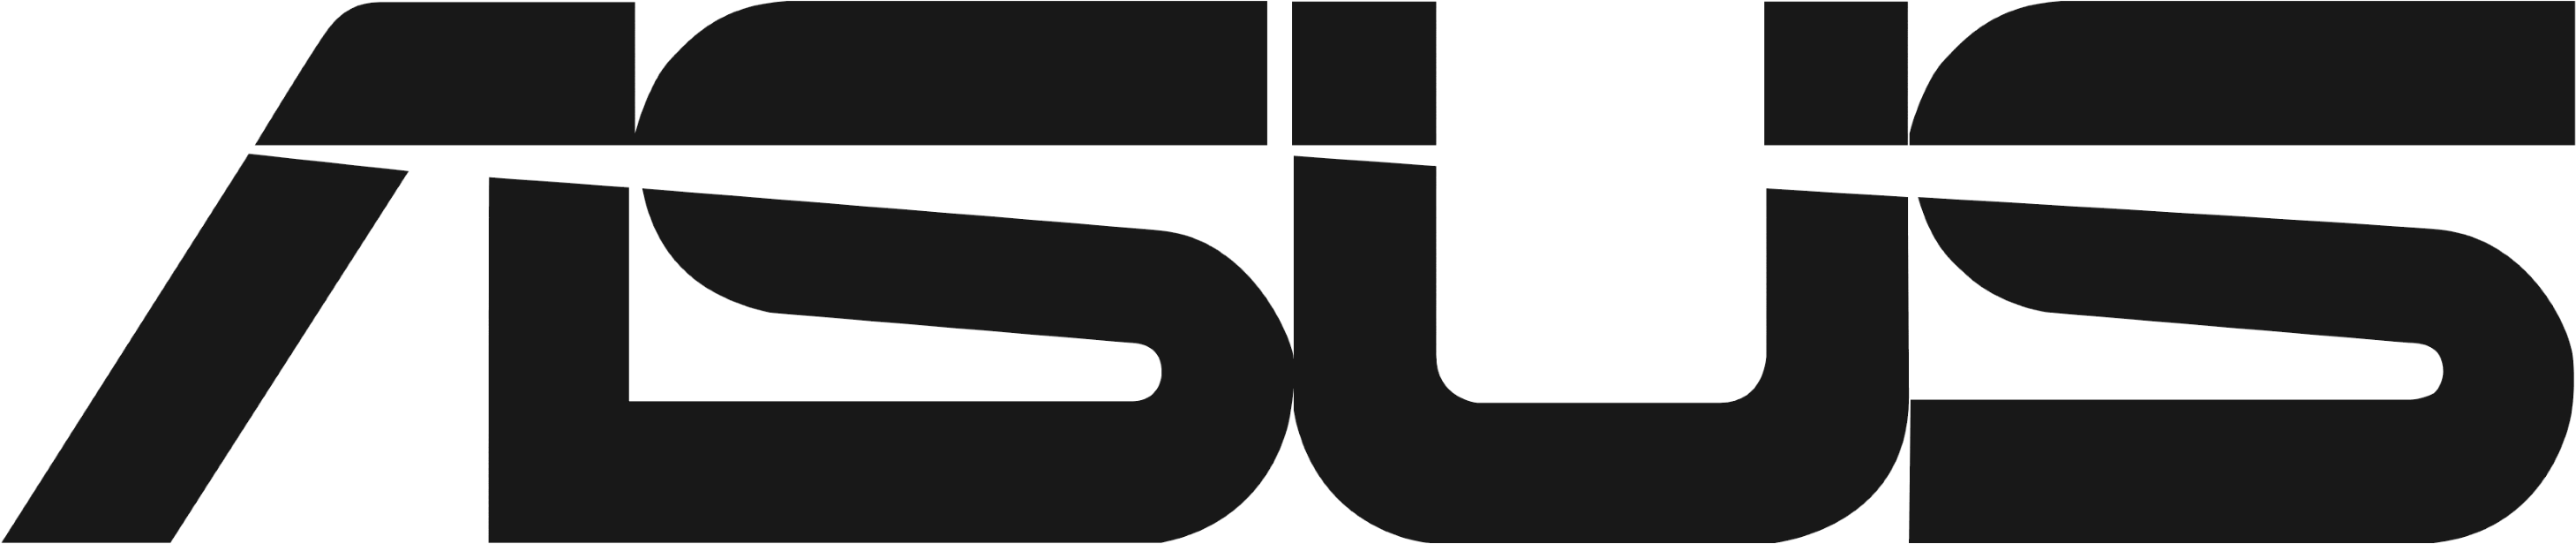 Asus Company Logo Black PNG